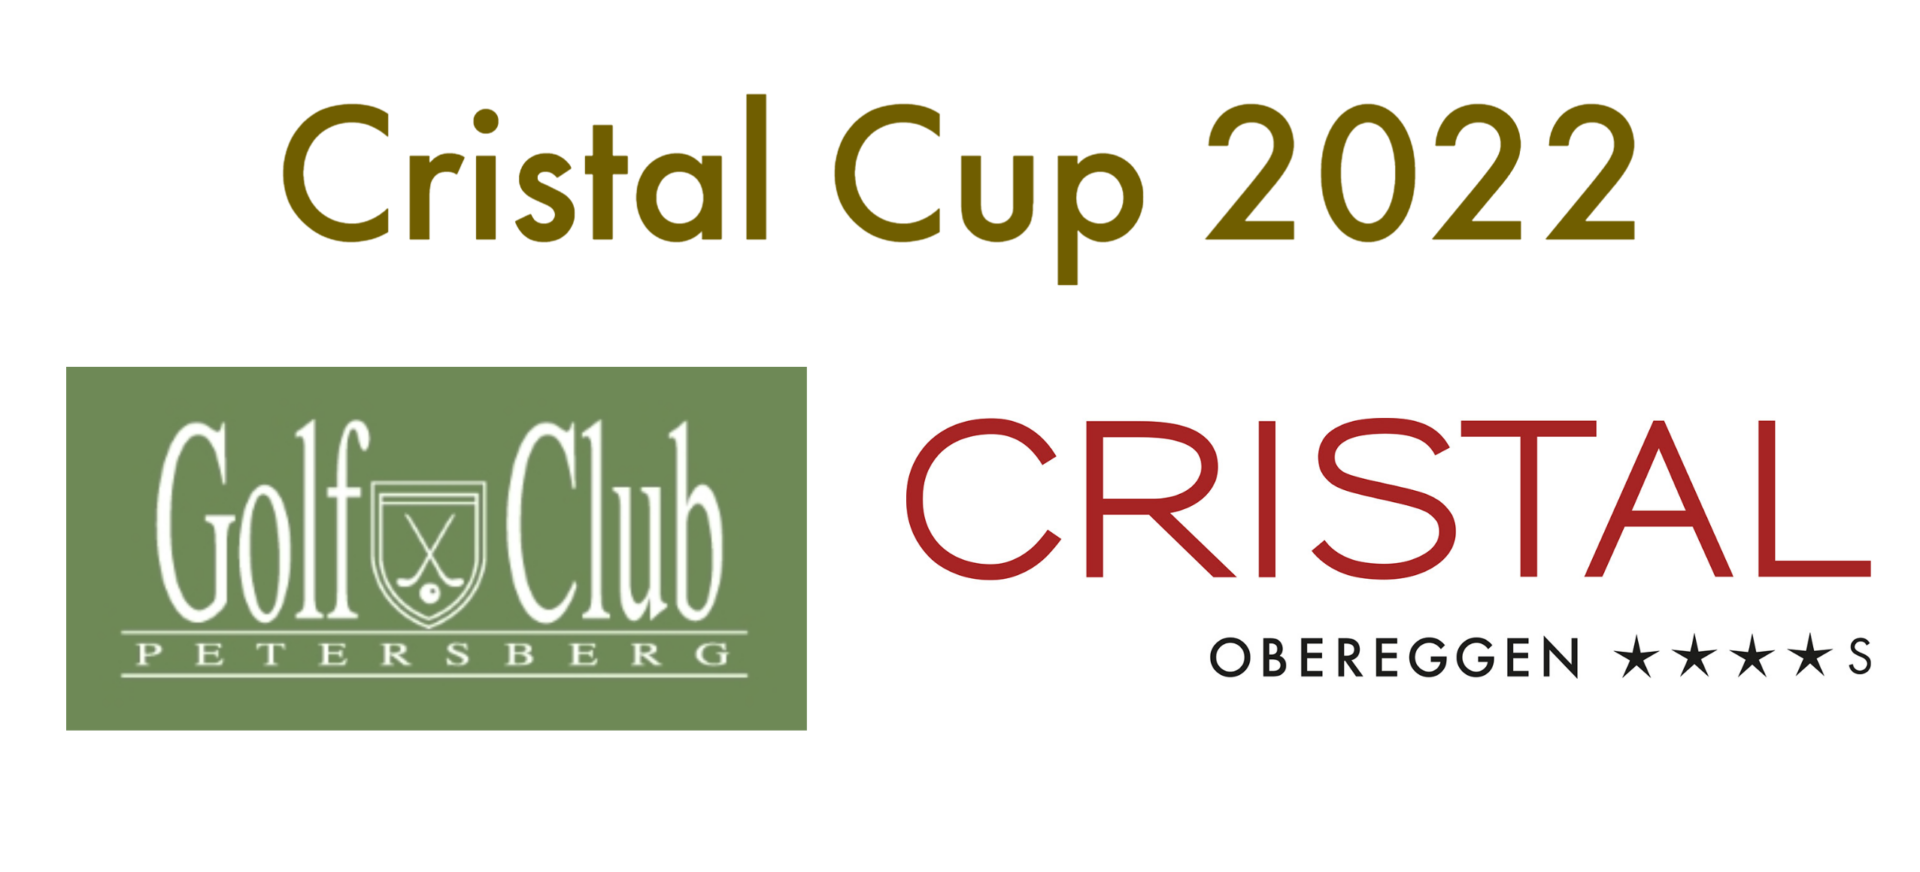 Cristal Cup 2022 cristalcup 2022 1